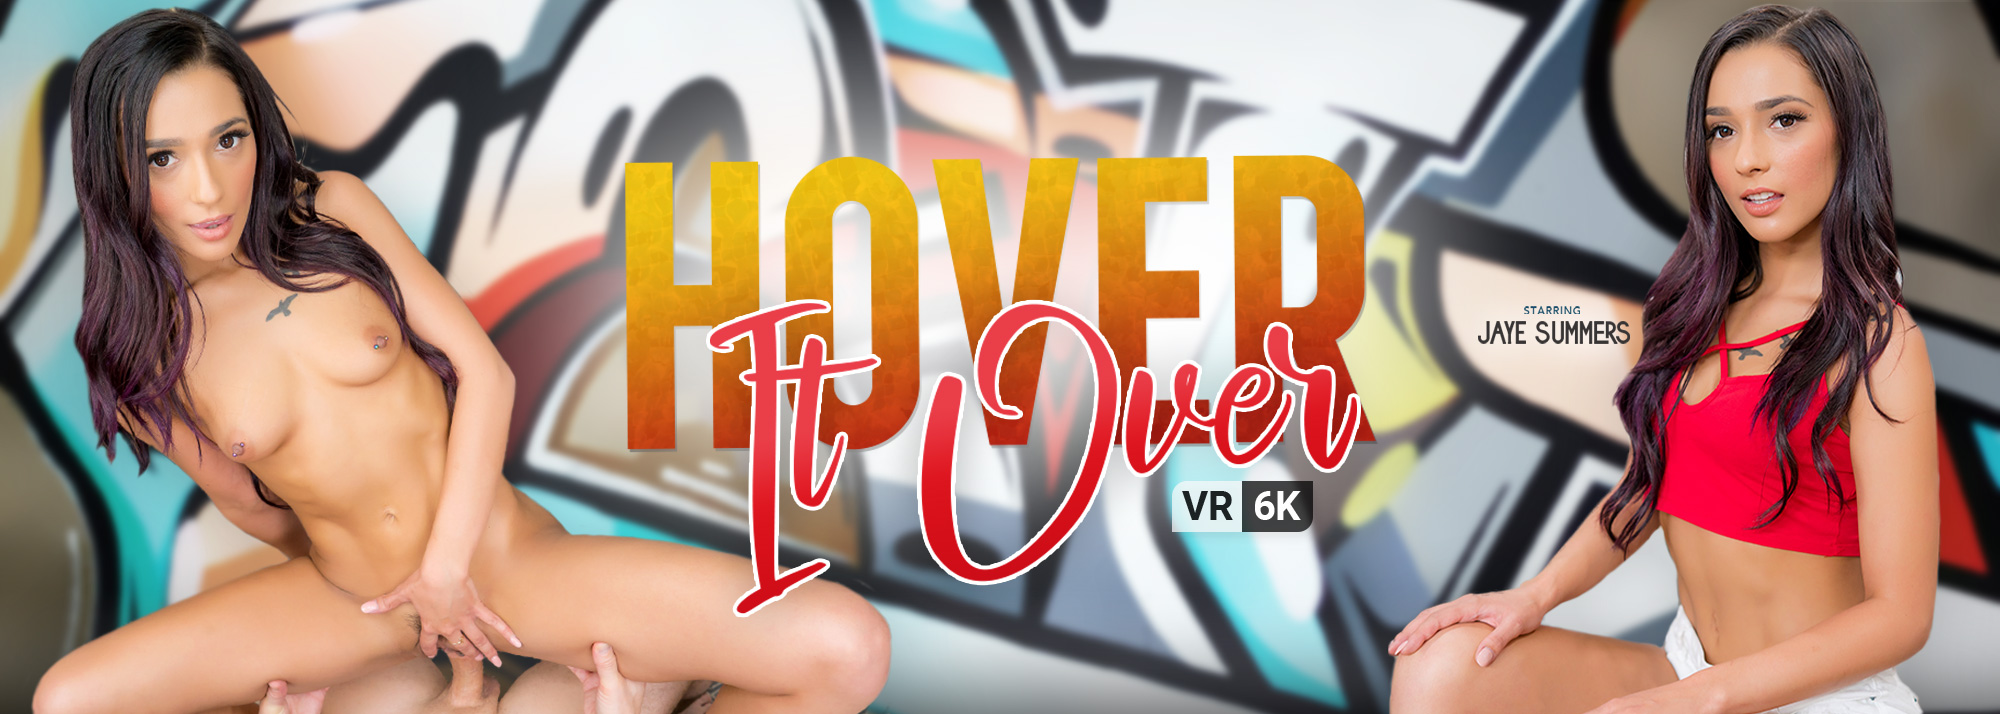 Hover It Over - VR Porn Video, Starring Jaye Summers VR